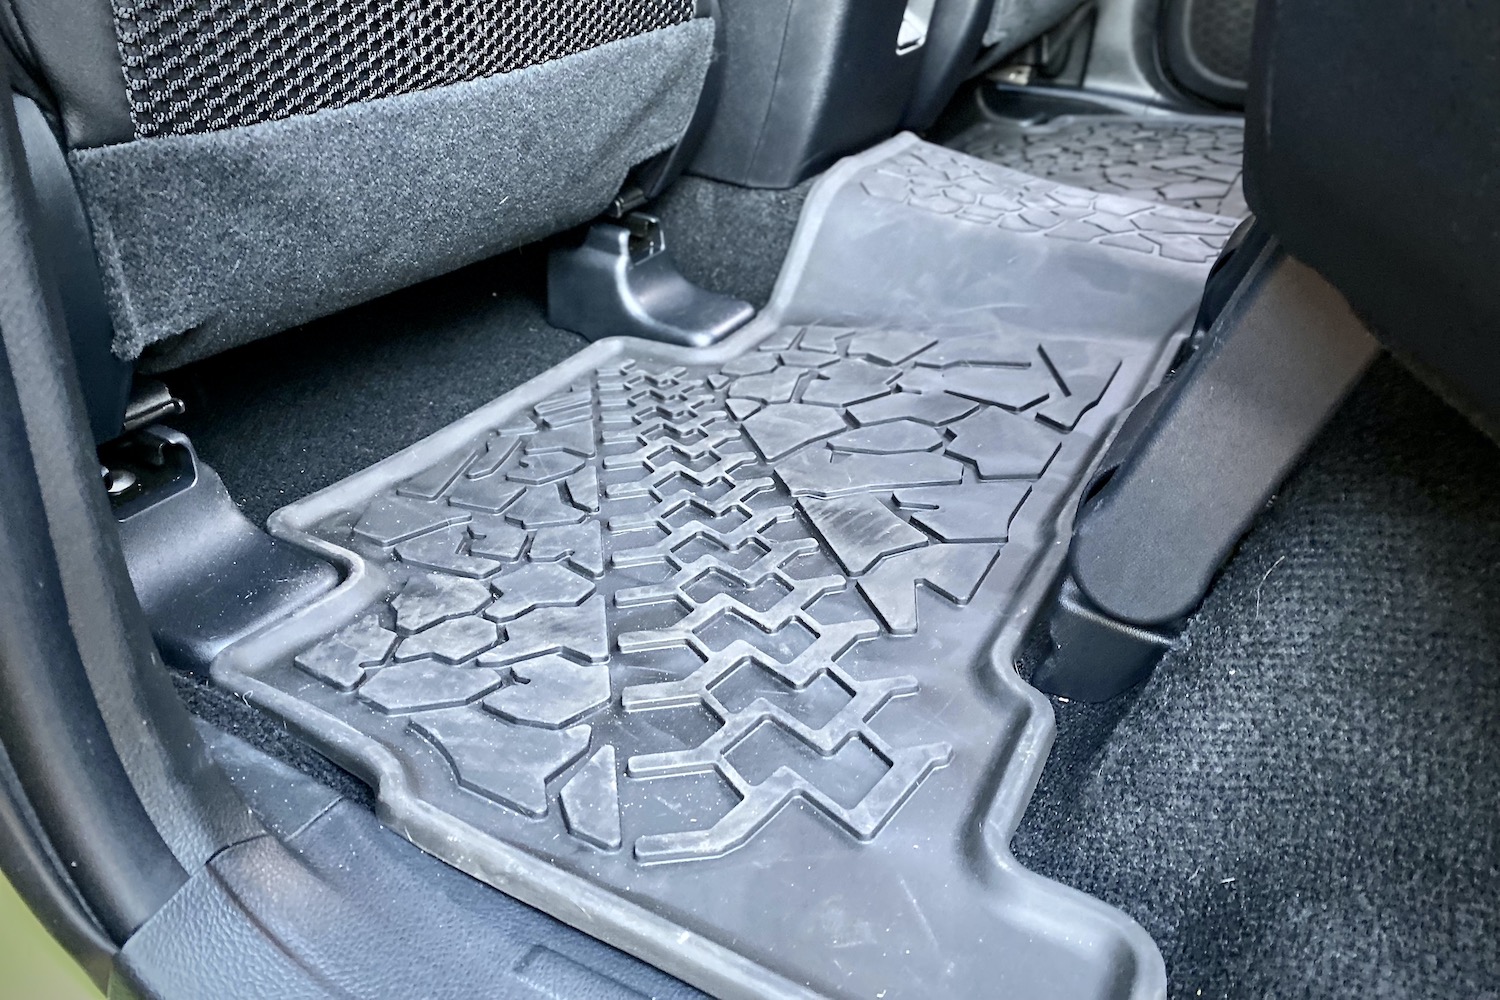 Rear floor mats of Toyota 4Runner TRD Pro from driver's side.